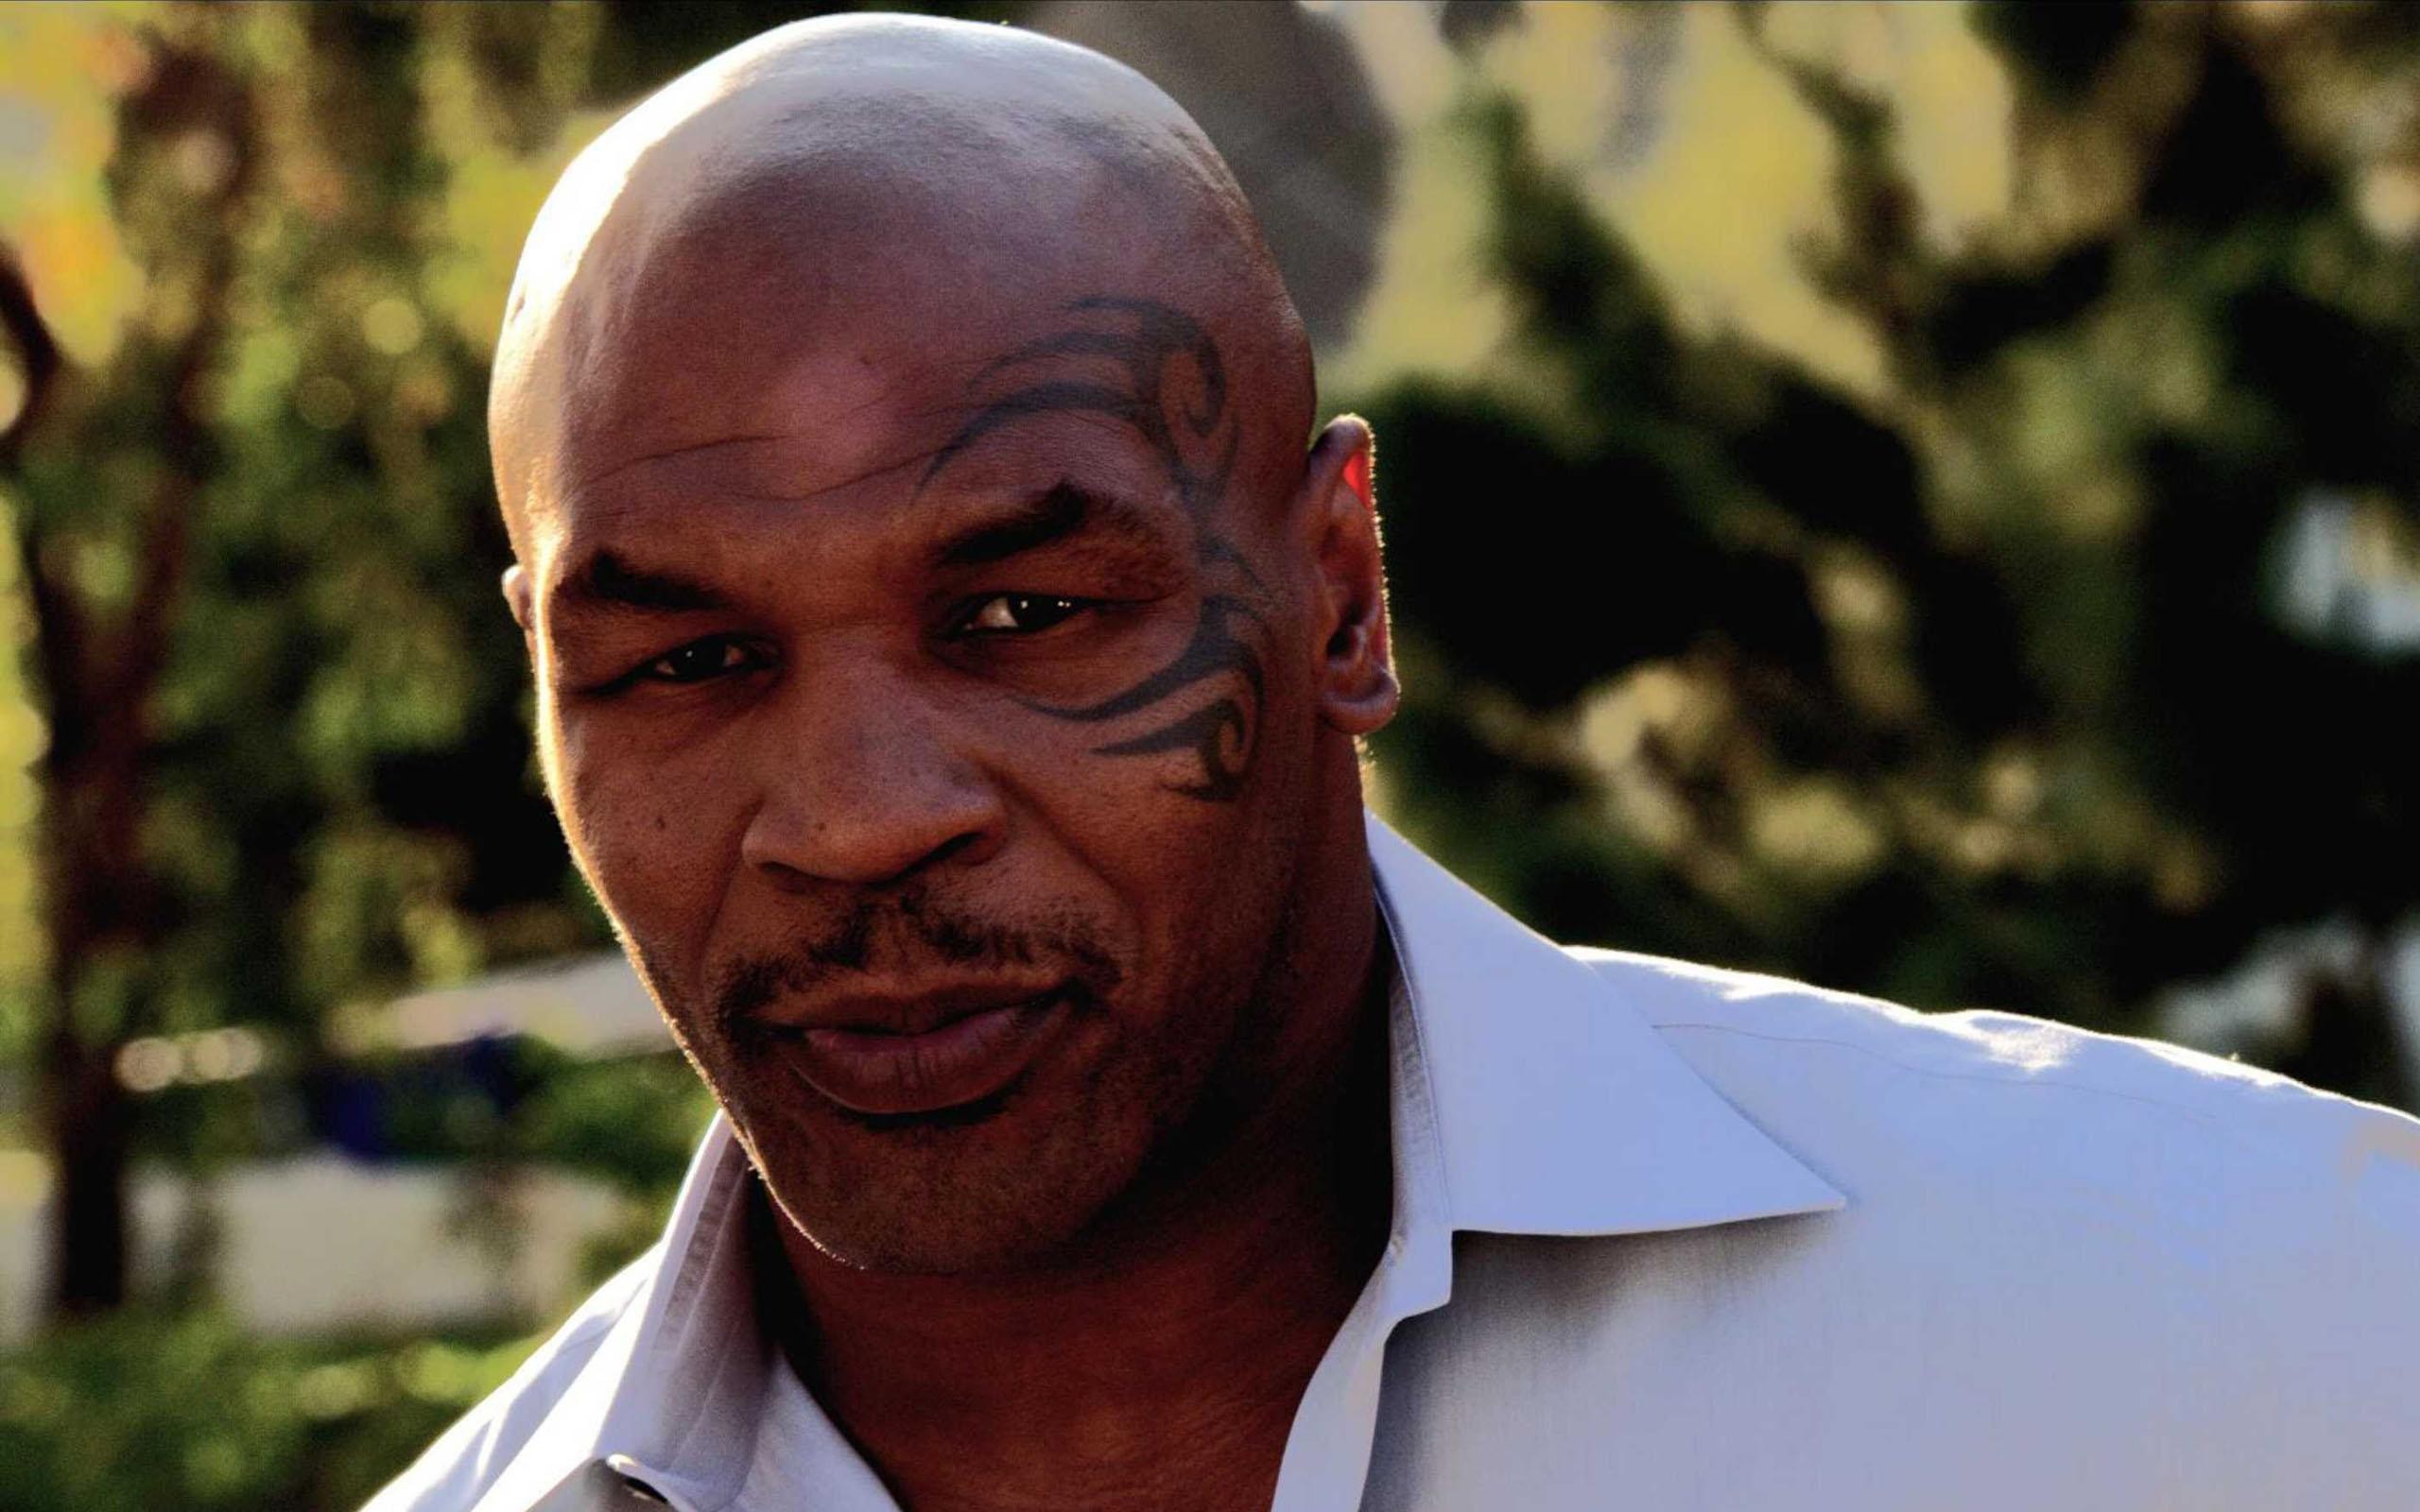 tattoos, Mike Tyson, faces - desktop wallpaper